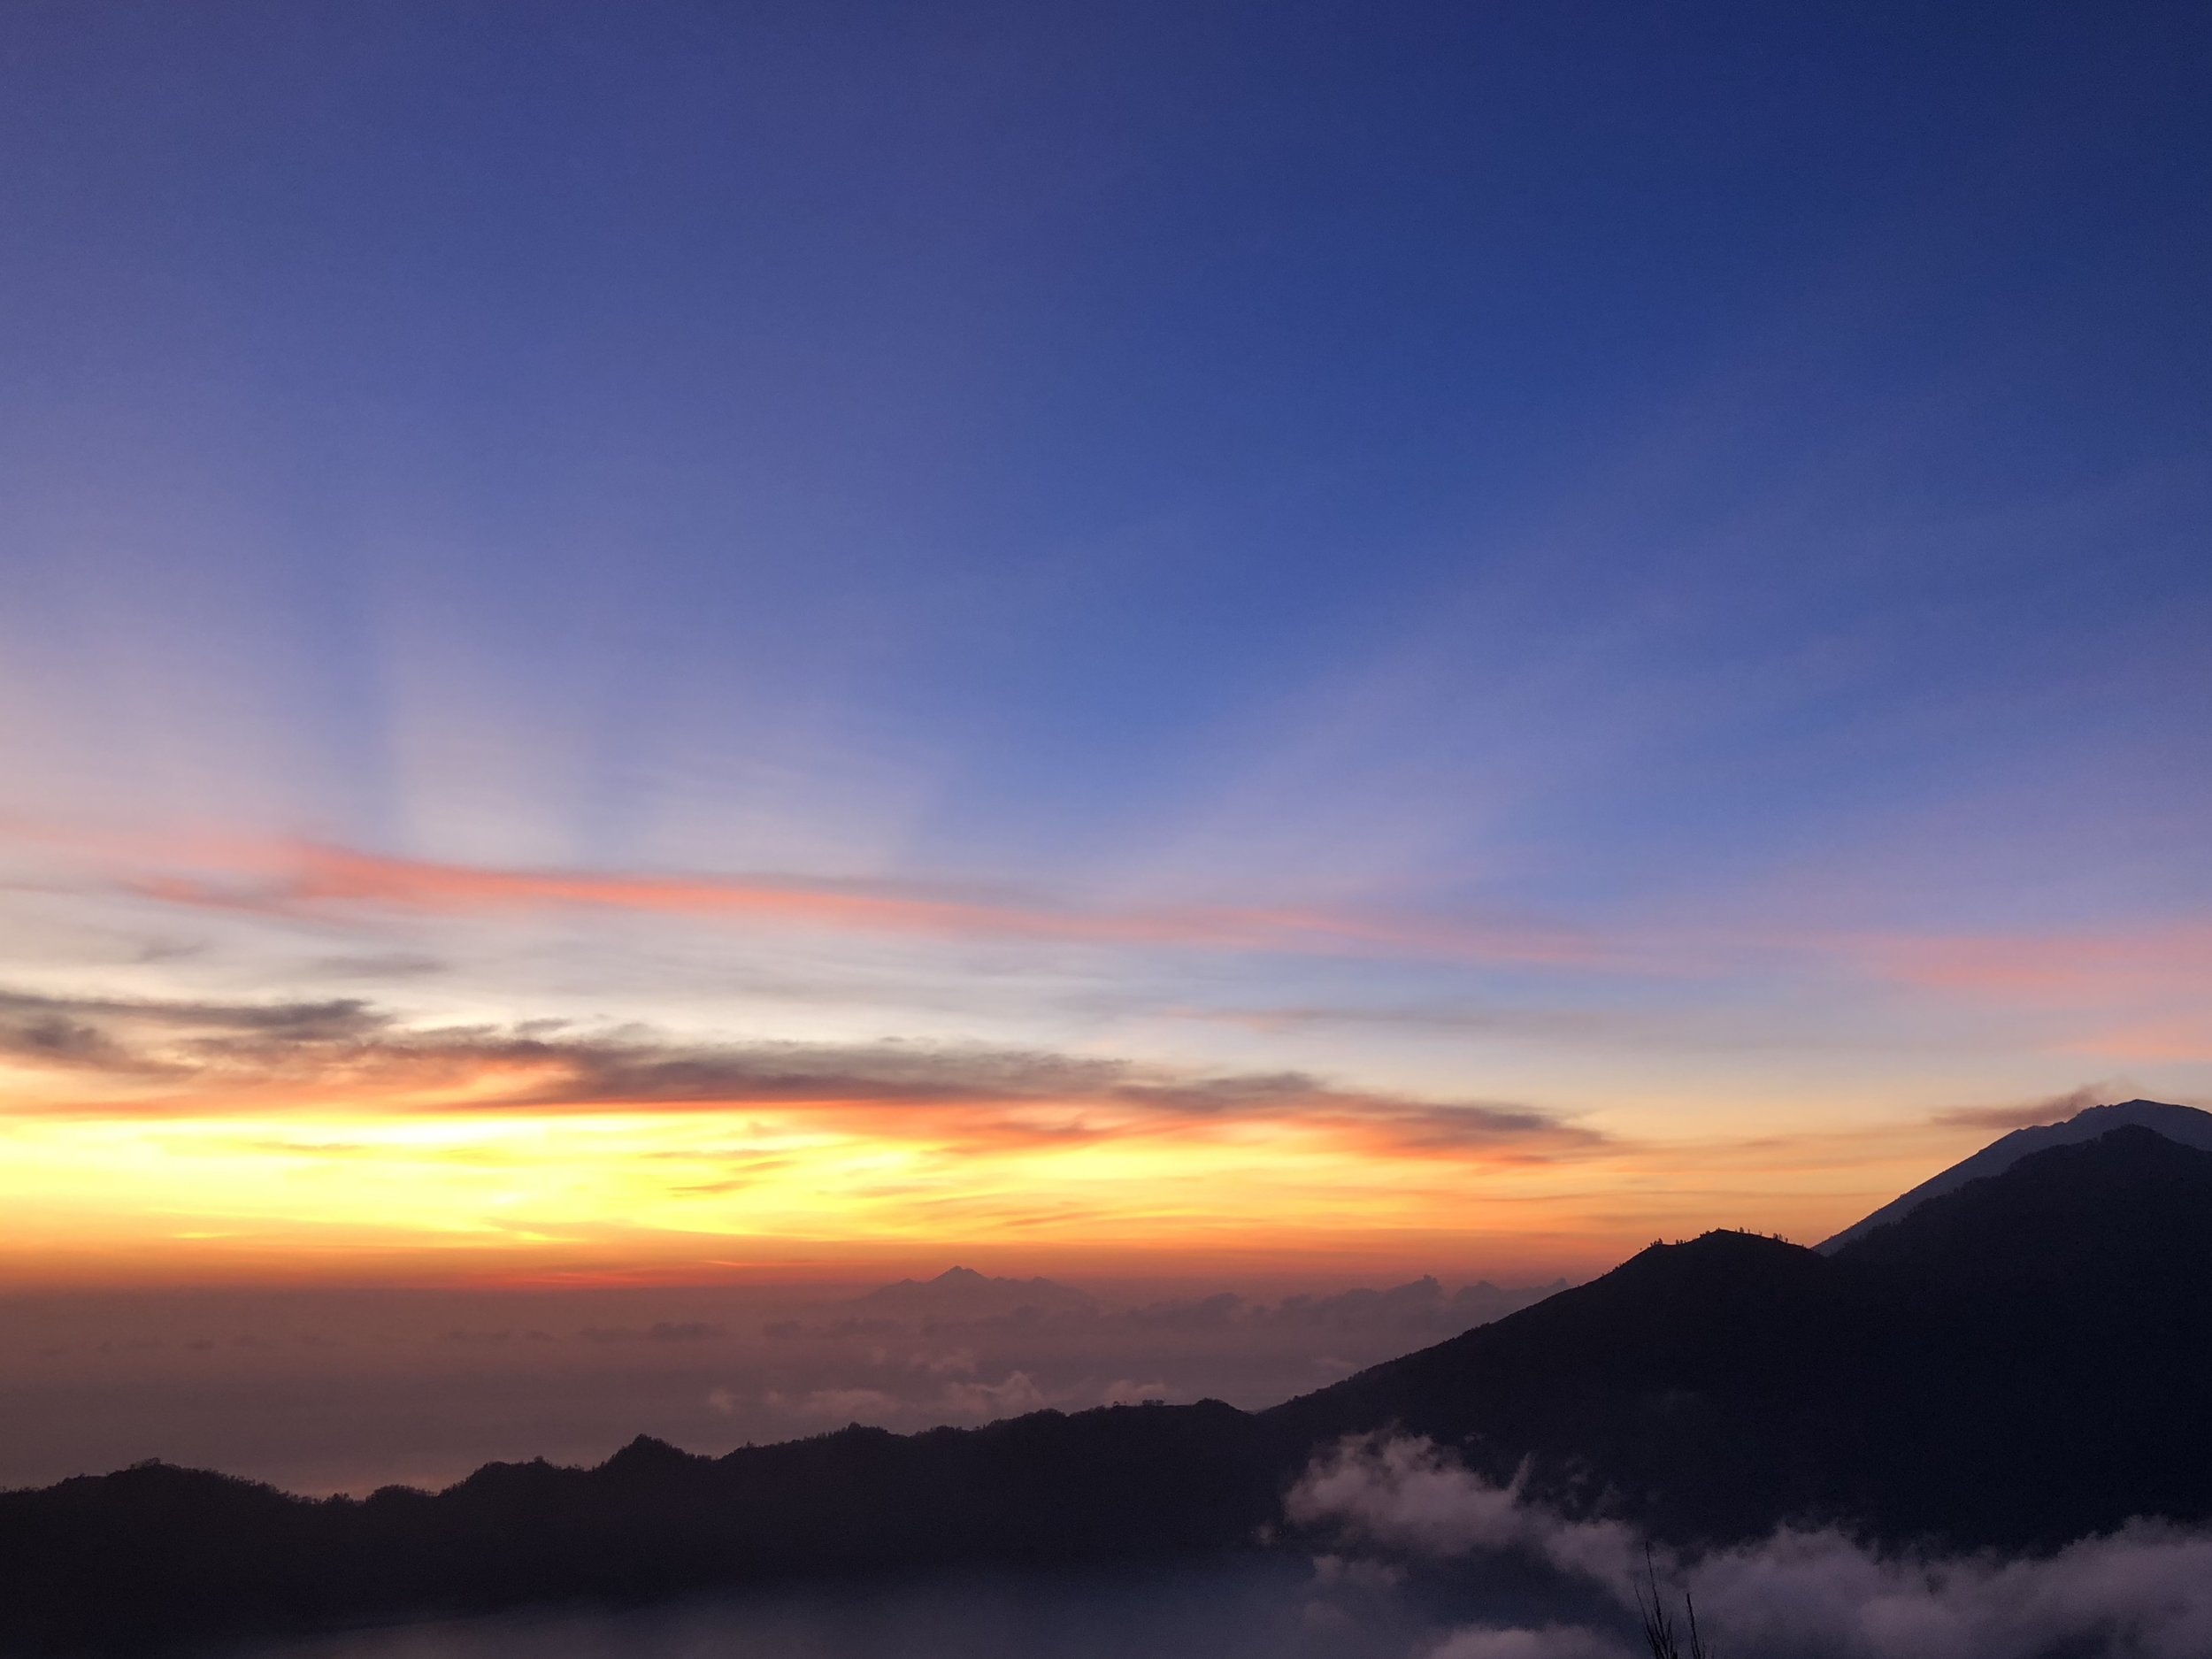 Sunrise from Mt. Batur in Bali, Indonesia